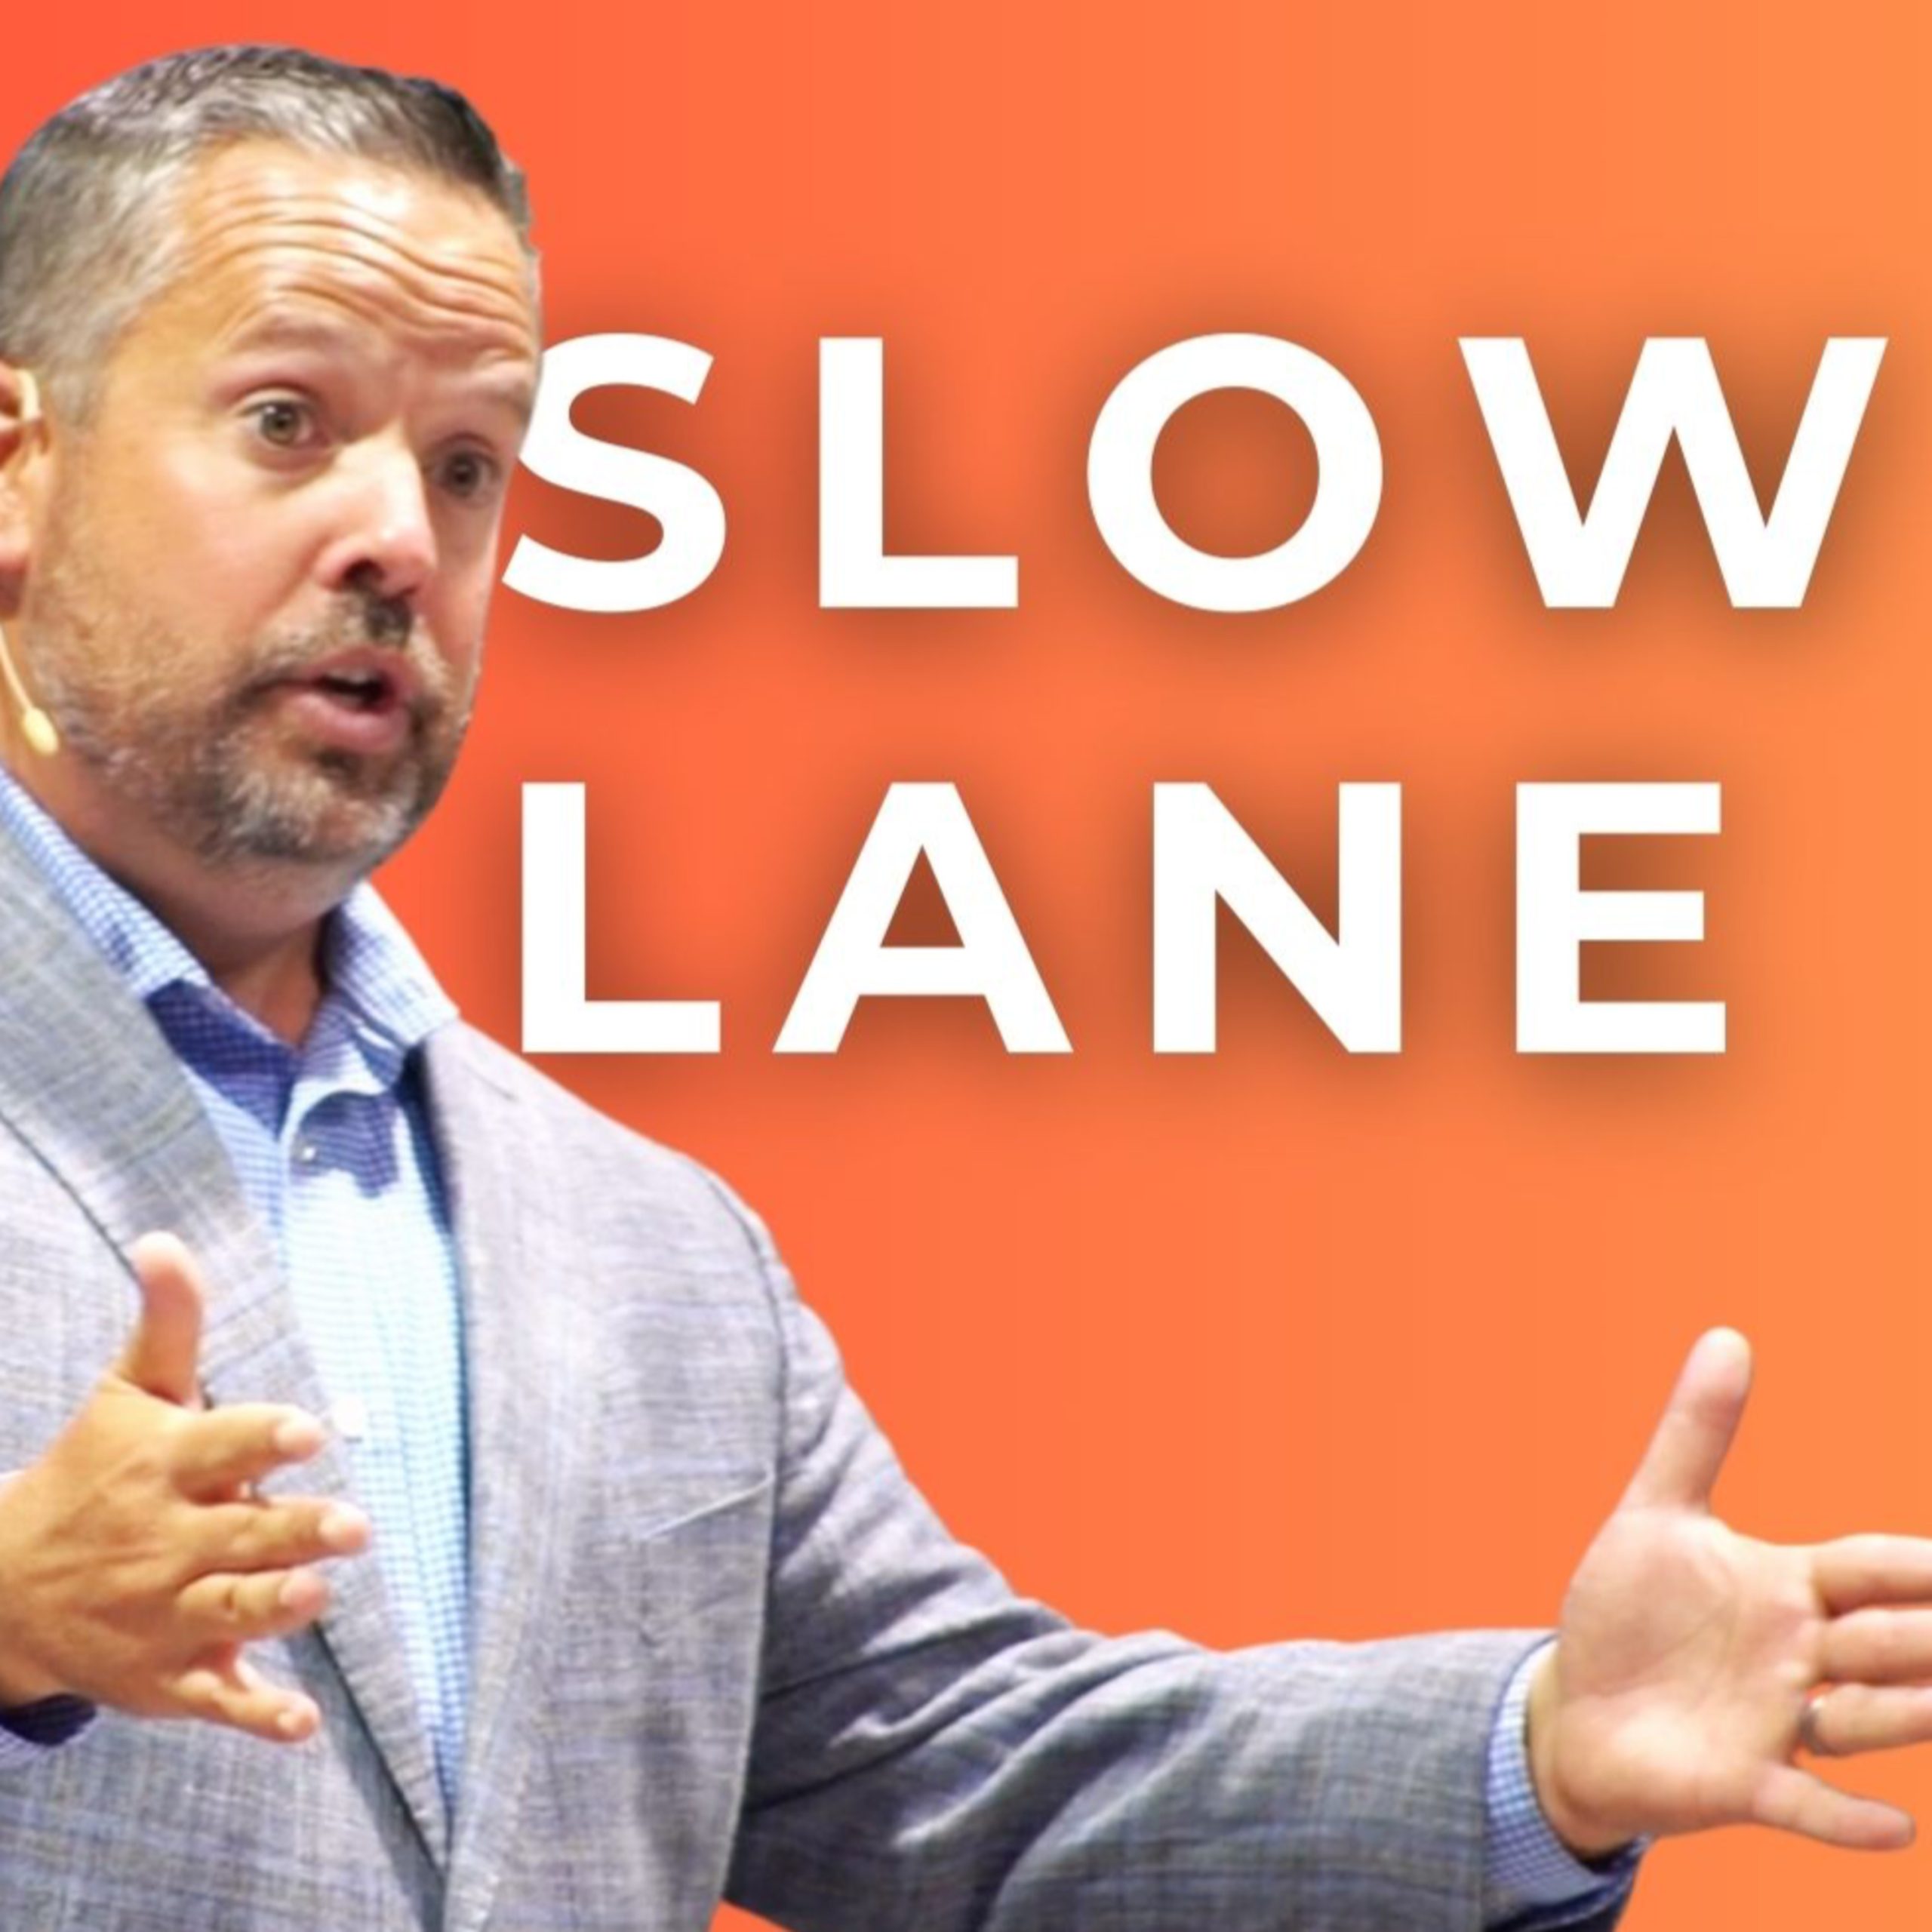 Take the Slow Lane